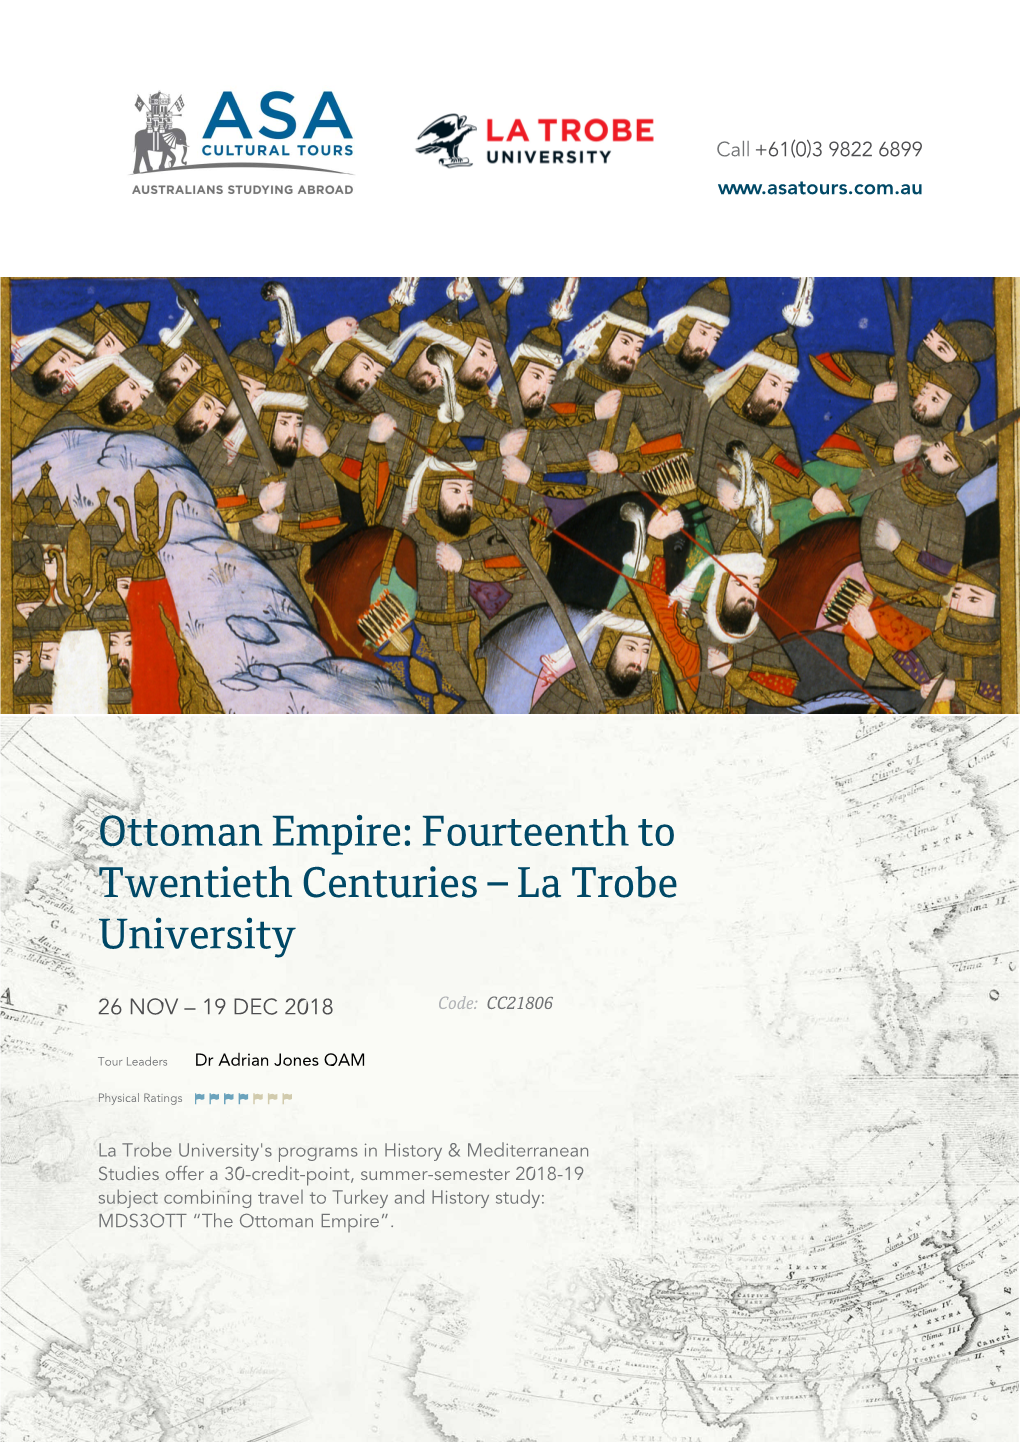 Ottoman Empire: Fourteenth to Twentieth Centuries – La Trobe University